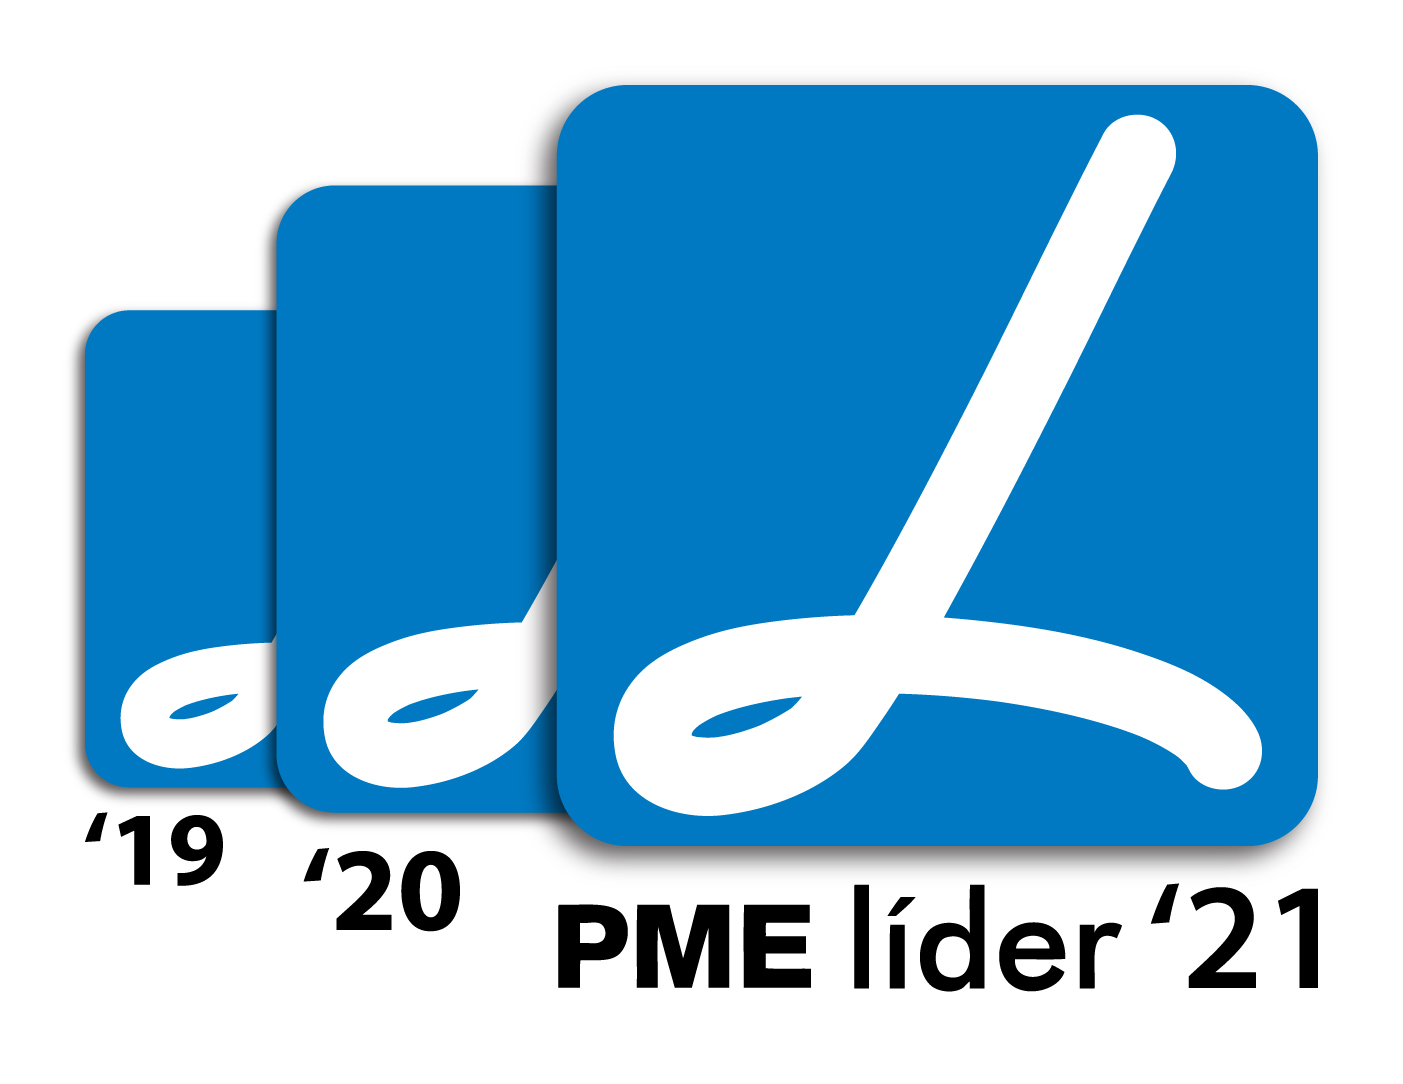 PME Líder 2021